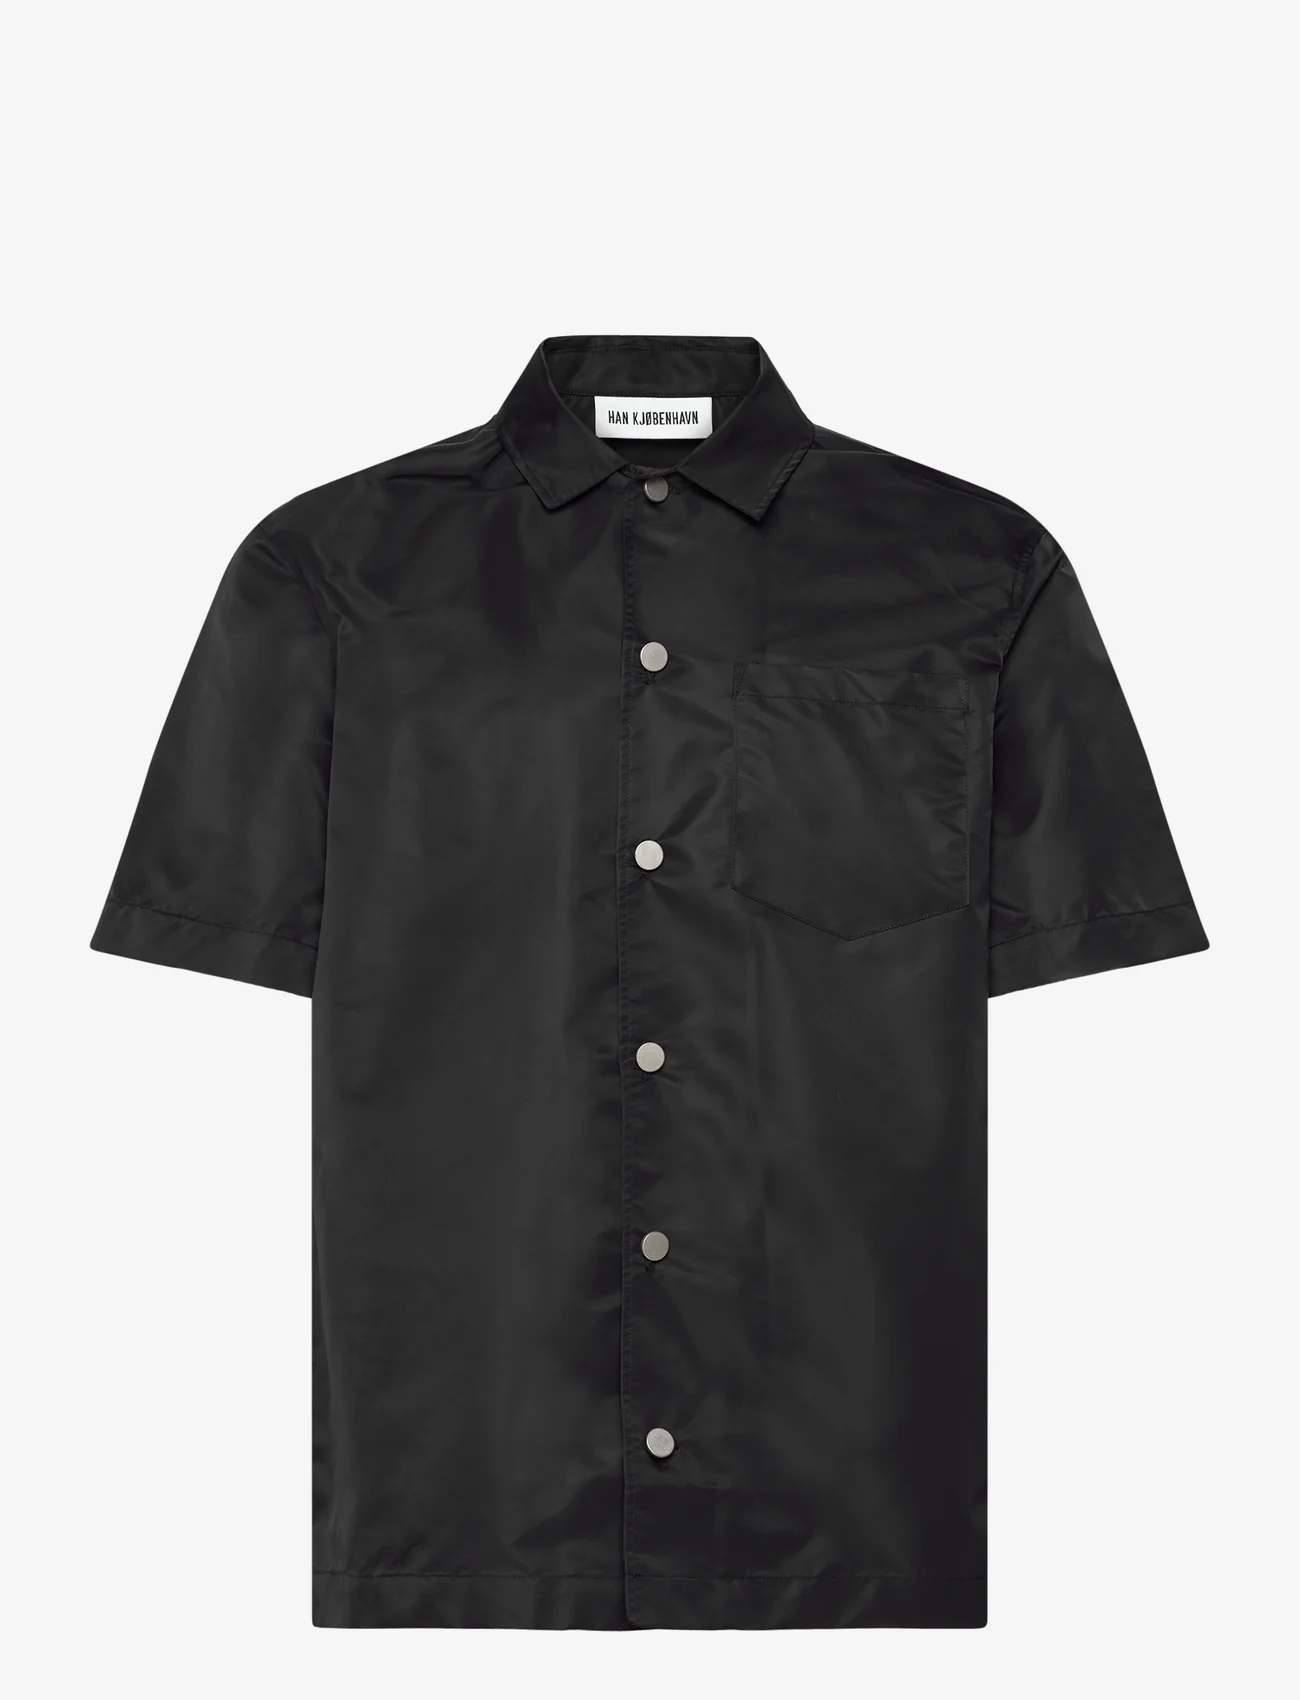 HAN Kjøbenhavn - Recycled Nylon Summer Shirt - lyhythihaiset - black - 0